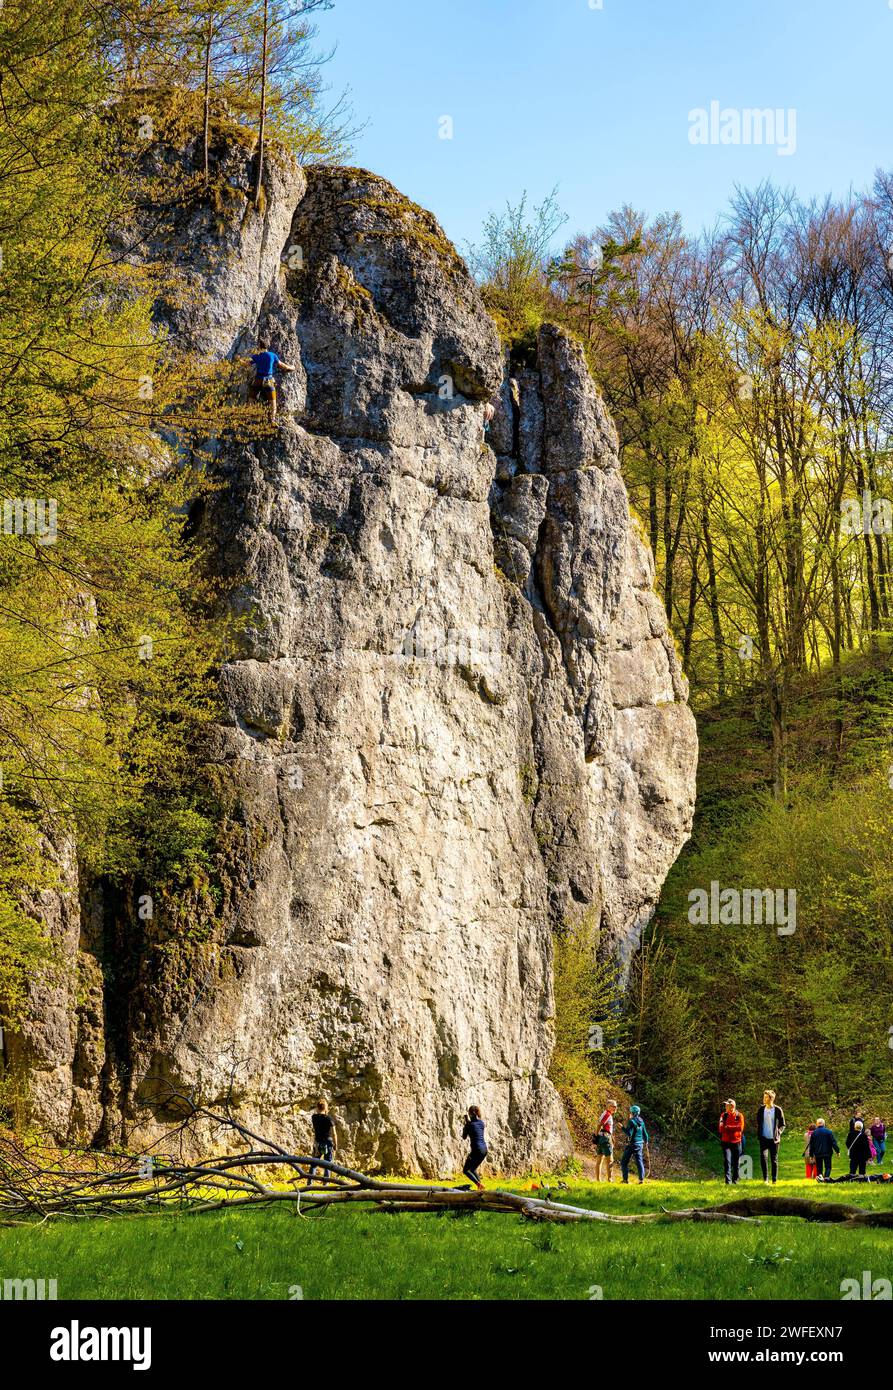 Dupa Slonia Bedkowska Baszta and Turnia Lipczynskiej limestone rock and climbing wall in Bedkowska Valley within Jura Krakowsko-Czestochowska upland n Stock Photo